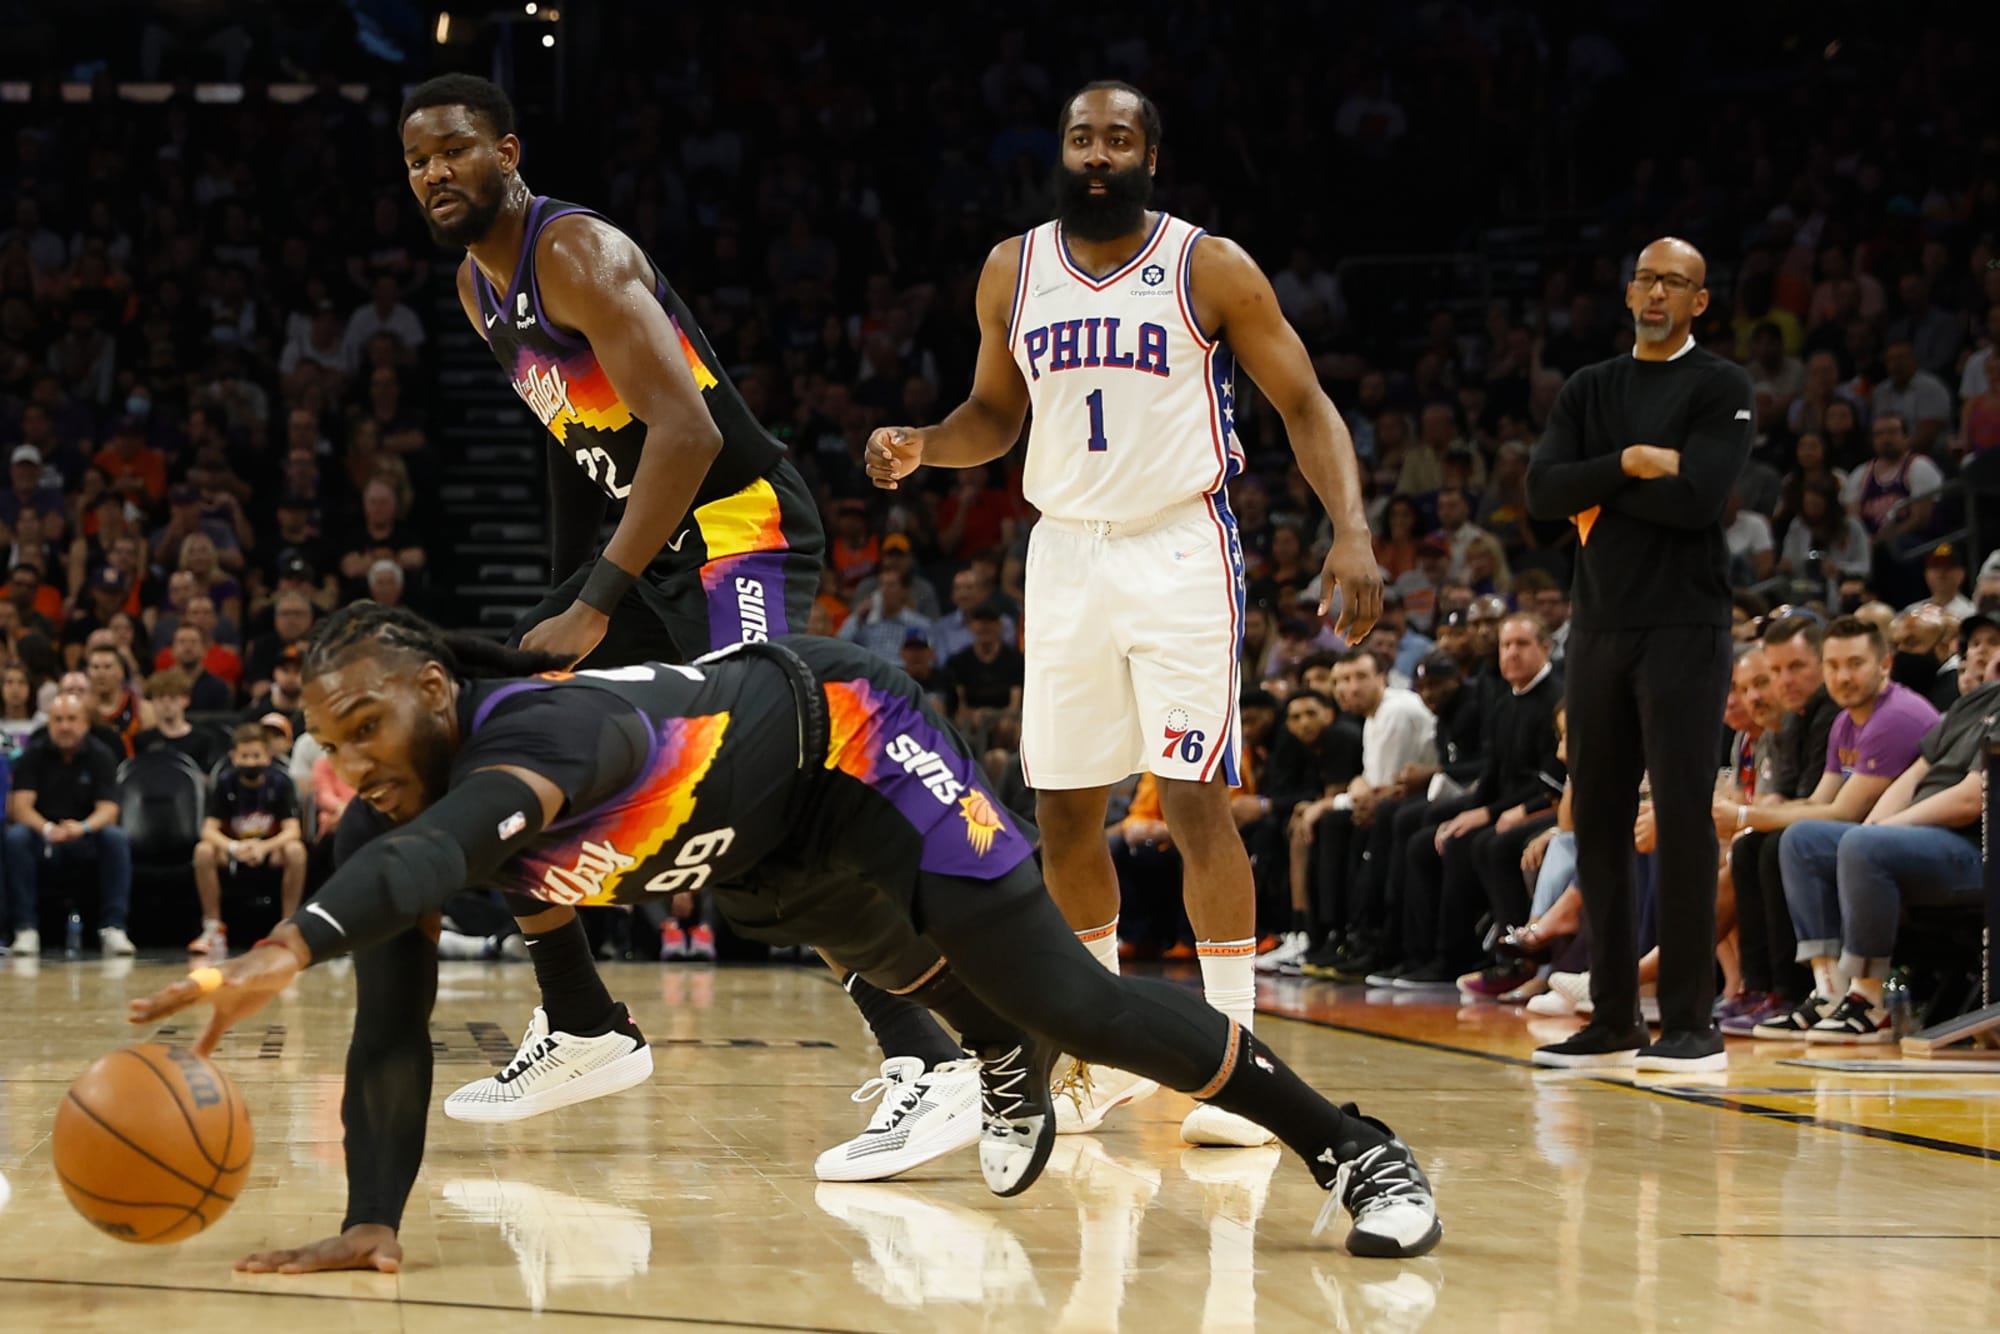 New Era NBA Tee Phoenix Suns - Burned Sports